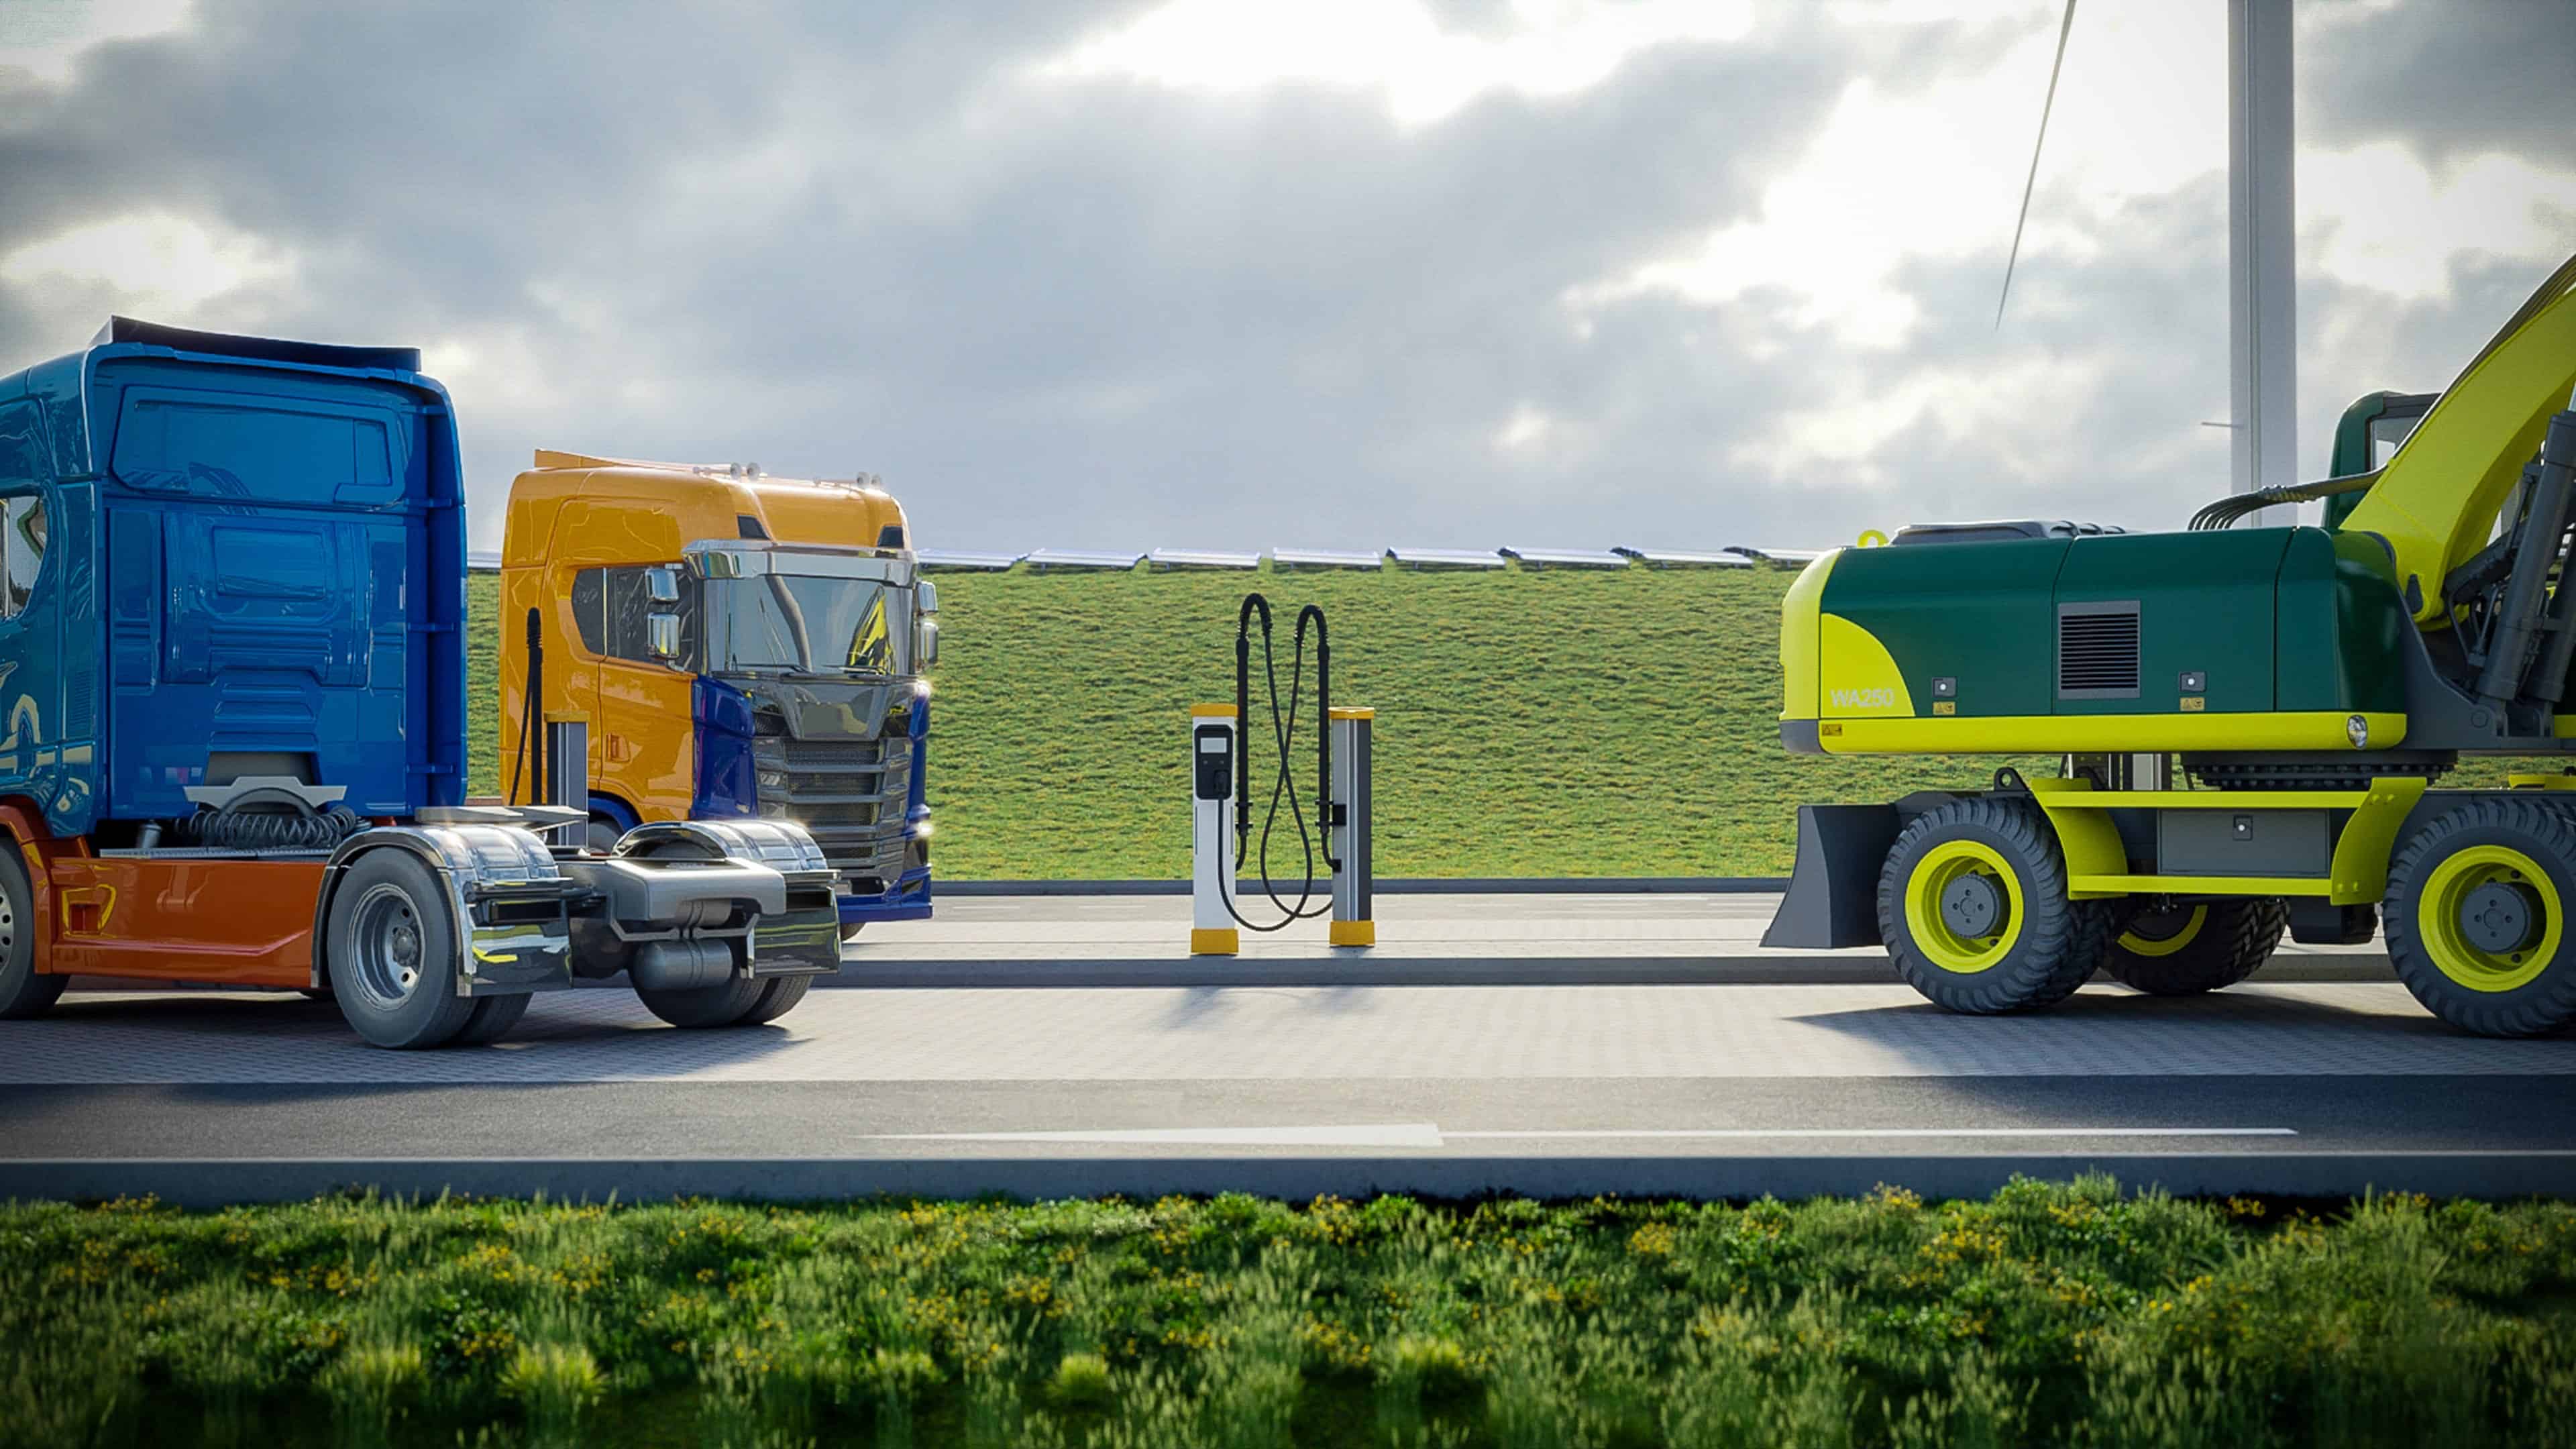 The world's first fast charging point for trucks is being built in Geldermalsen